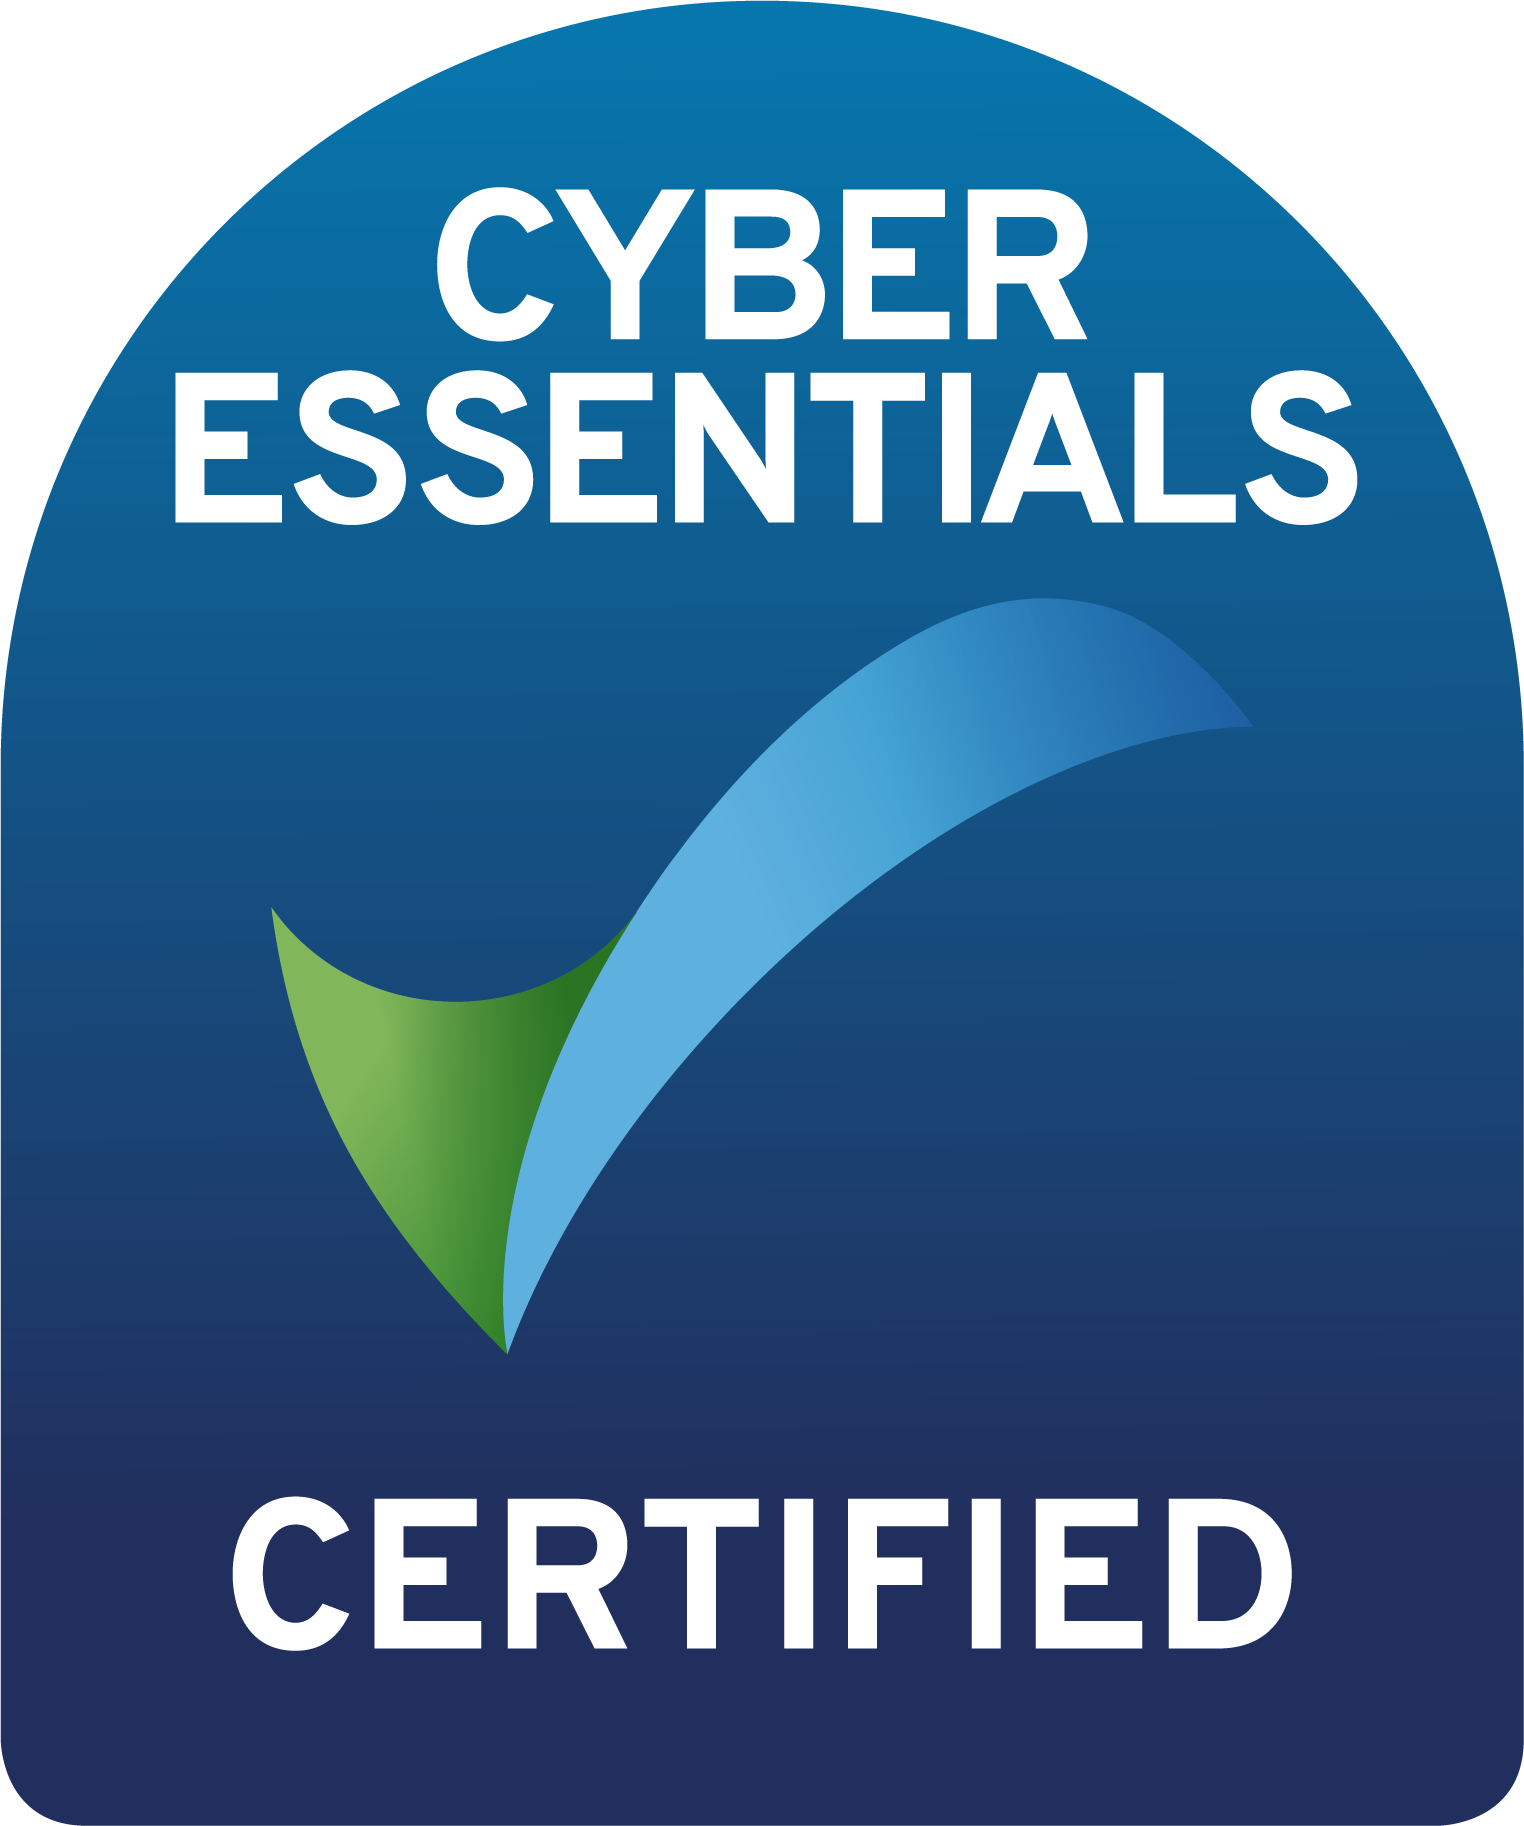 Cyberessentials Certification Mark Colour 6